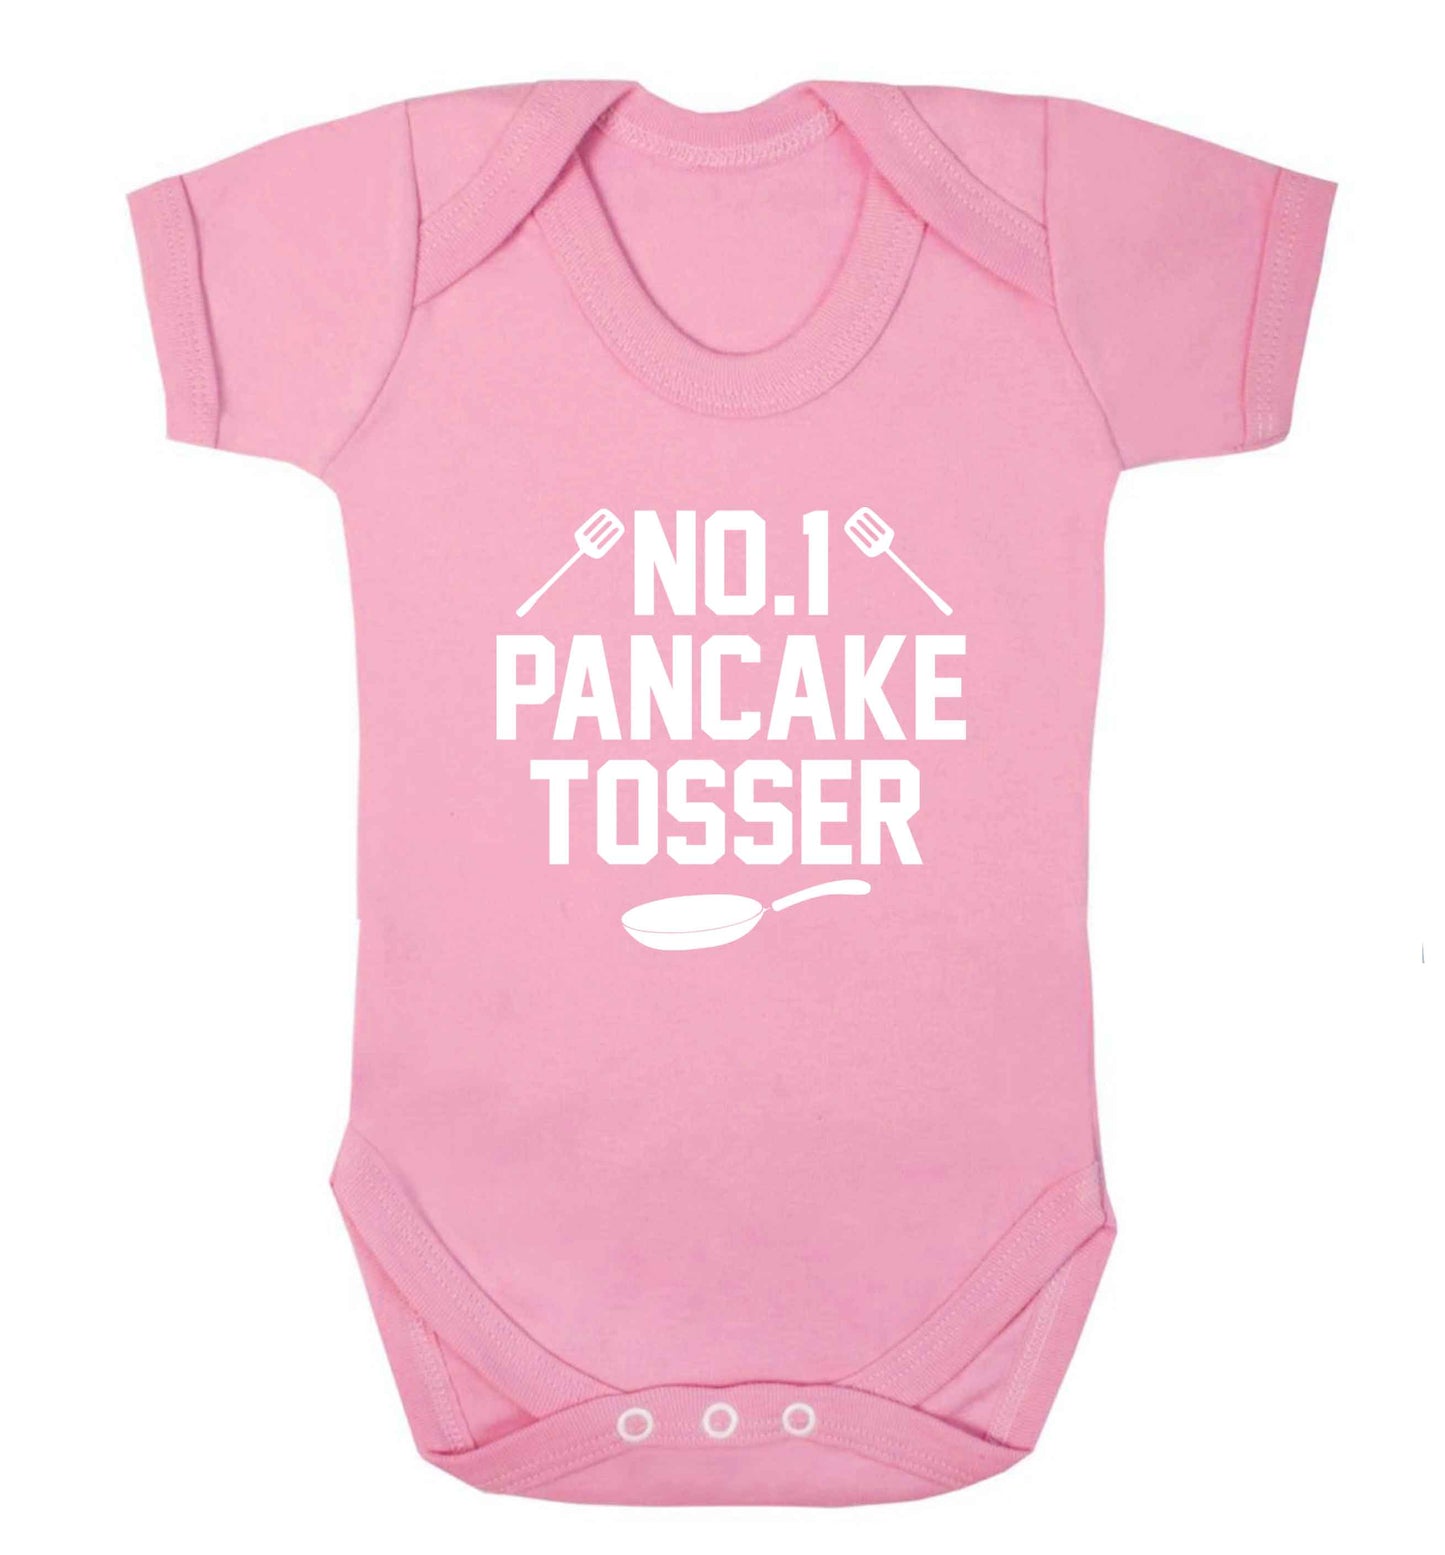 No.1 Pancake tosser baby vest pale pink 18-24 months